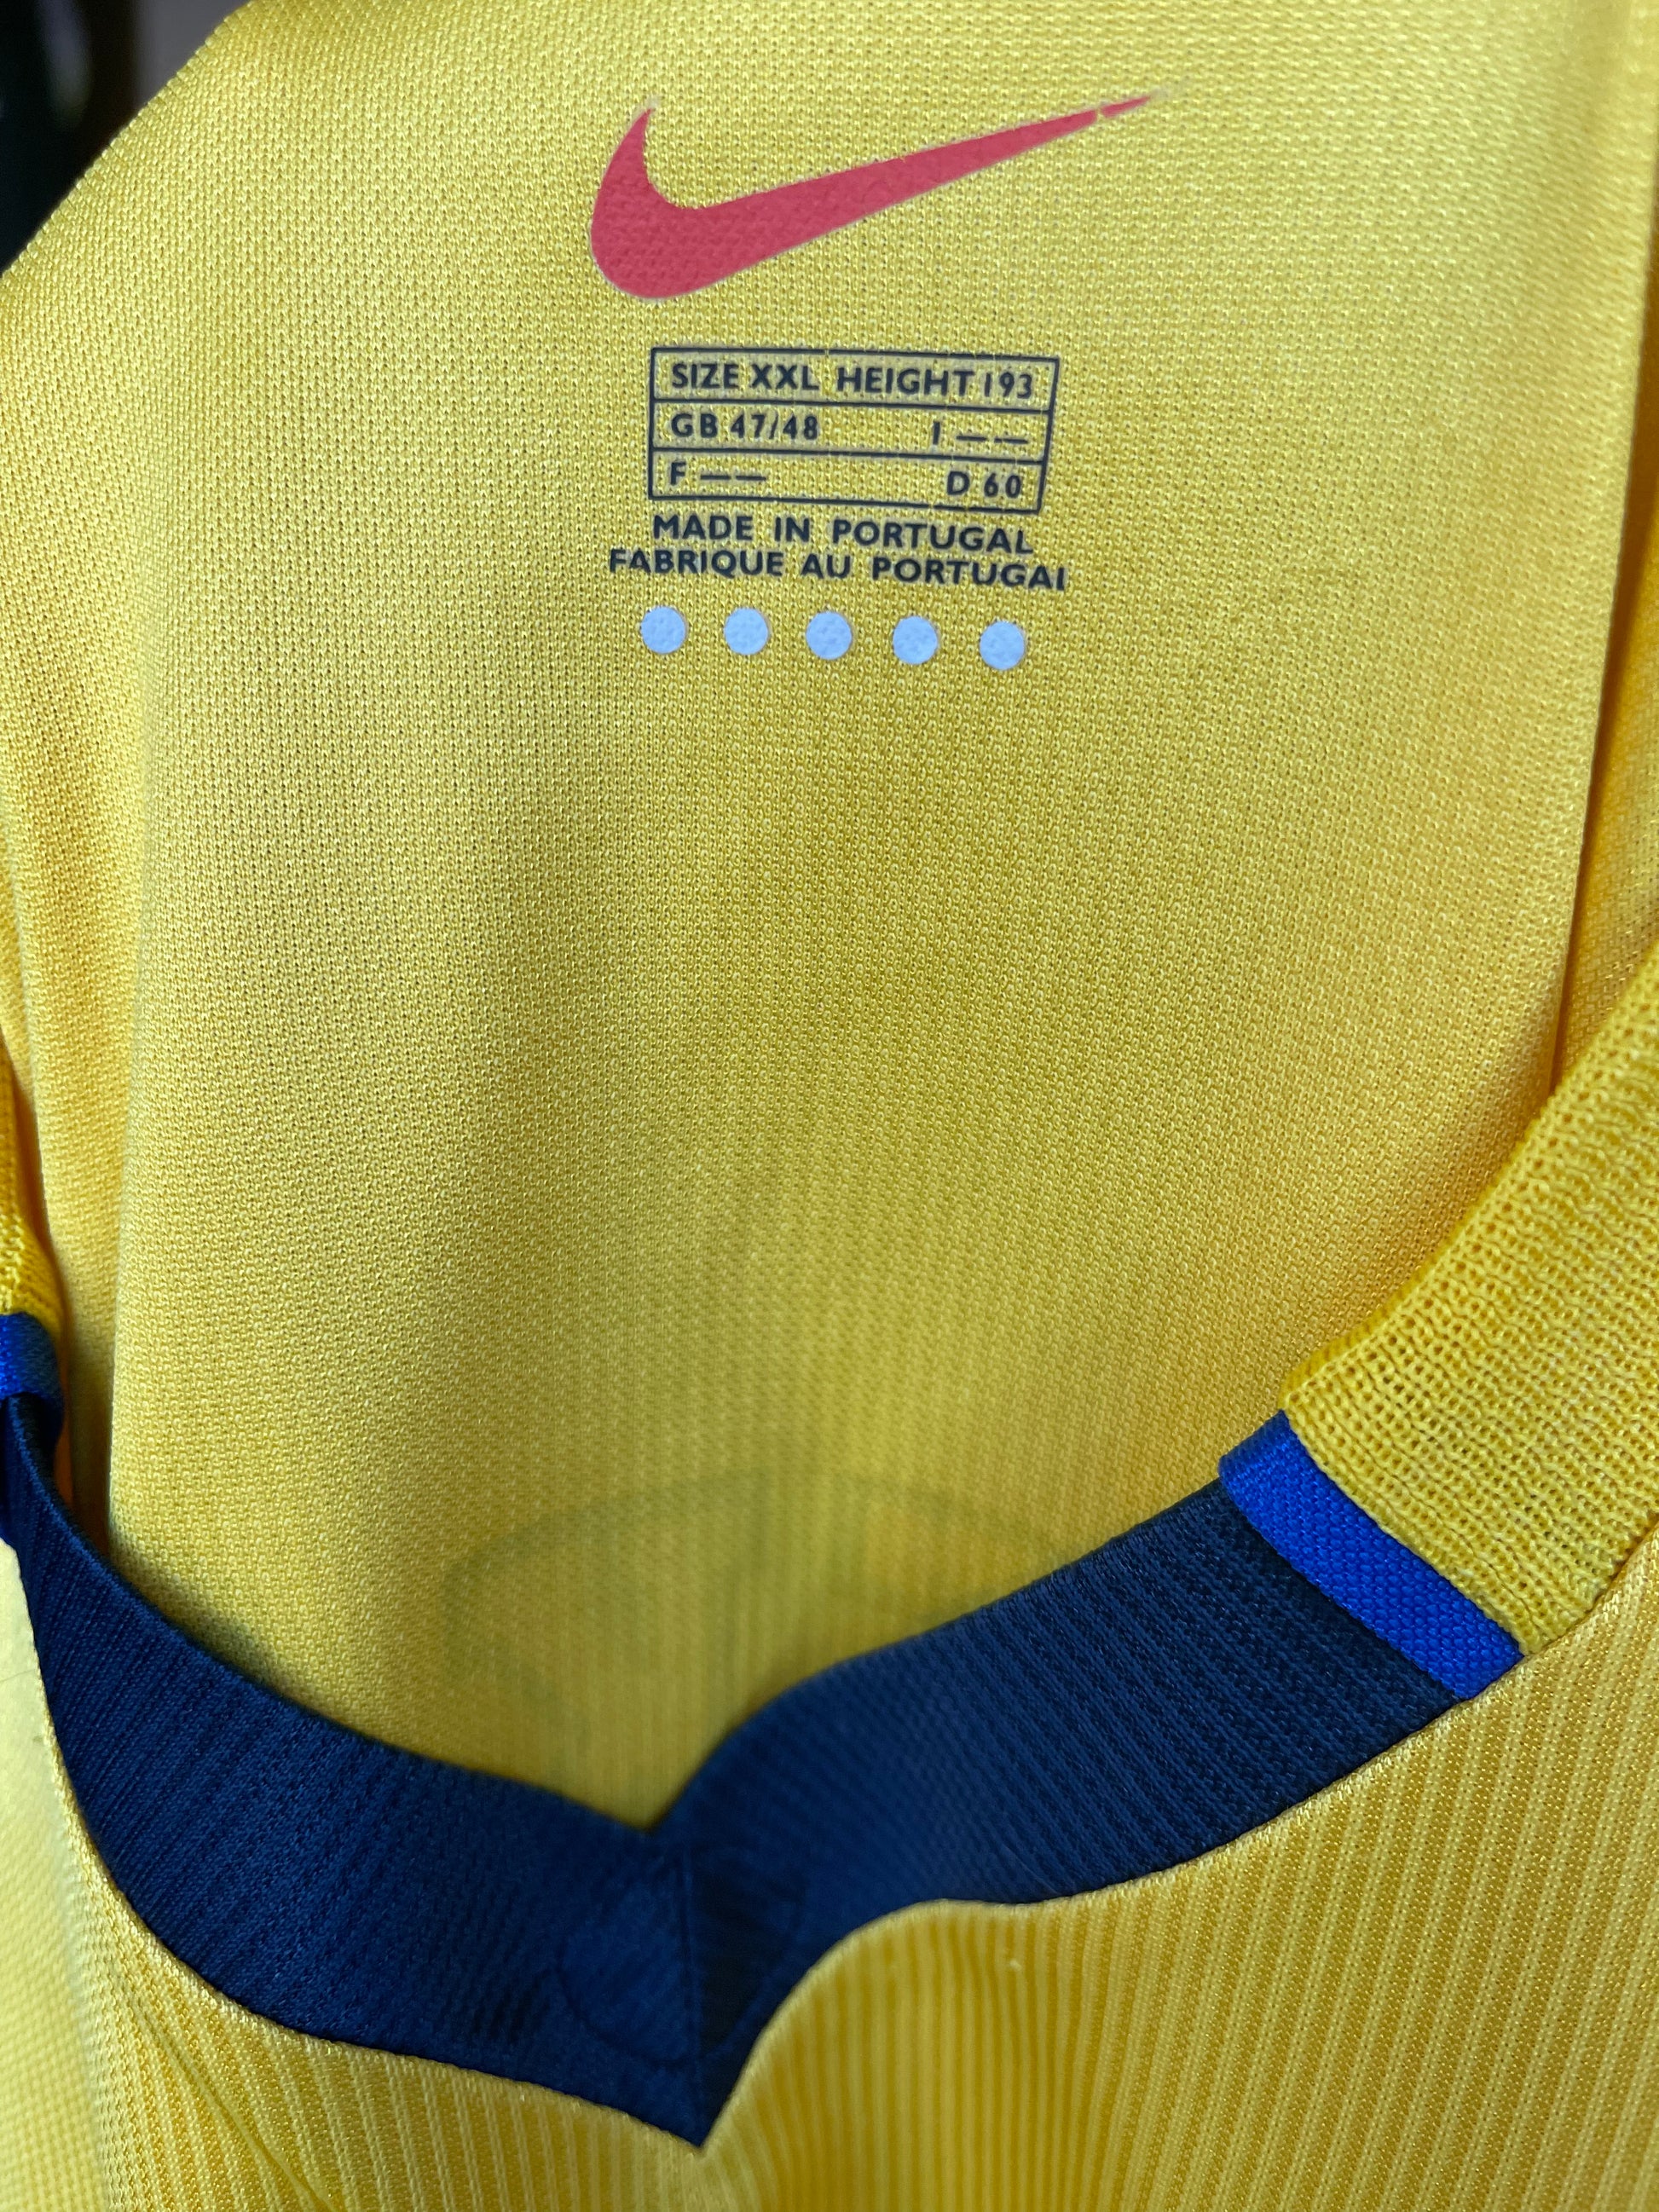 Arsenal Londra Dennis Bergkamp Nike #10 1999 2000 Away Football Shirt Sega Yellow Blue Size XXL